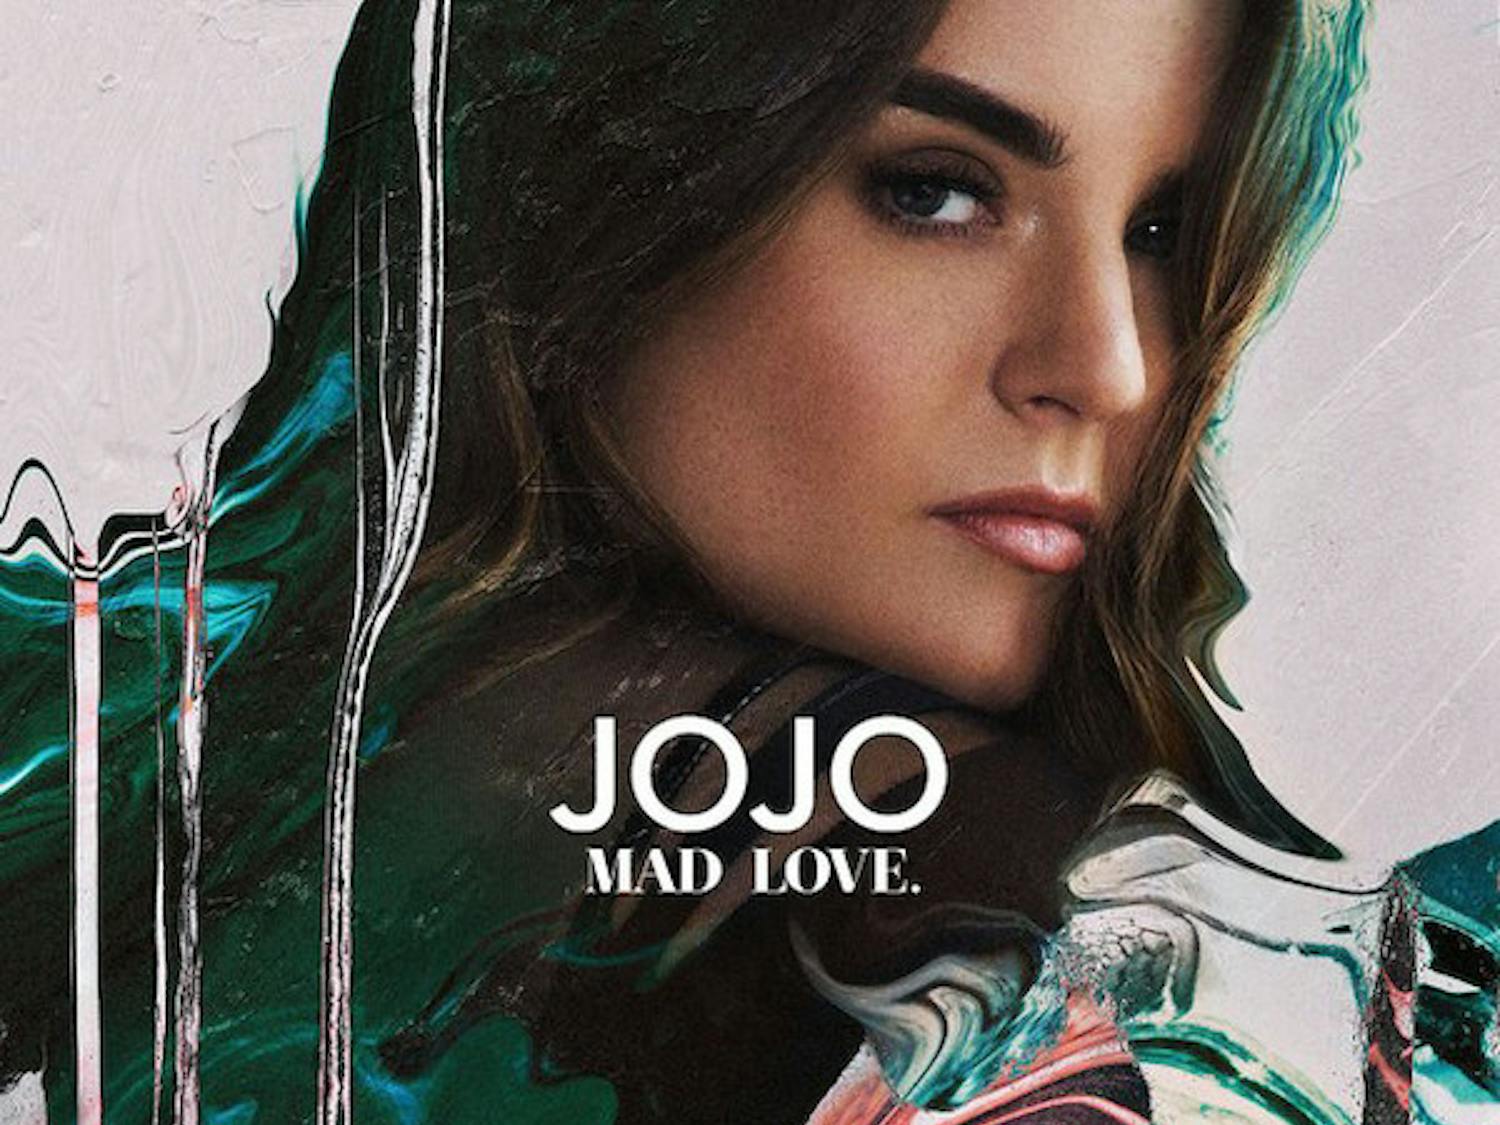 mad_love1-jojo-mad-love-2